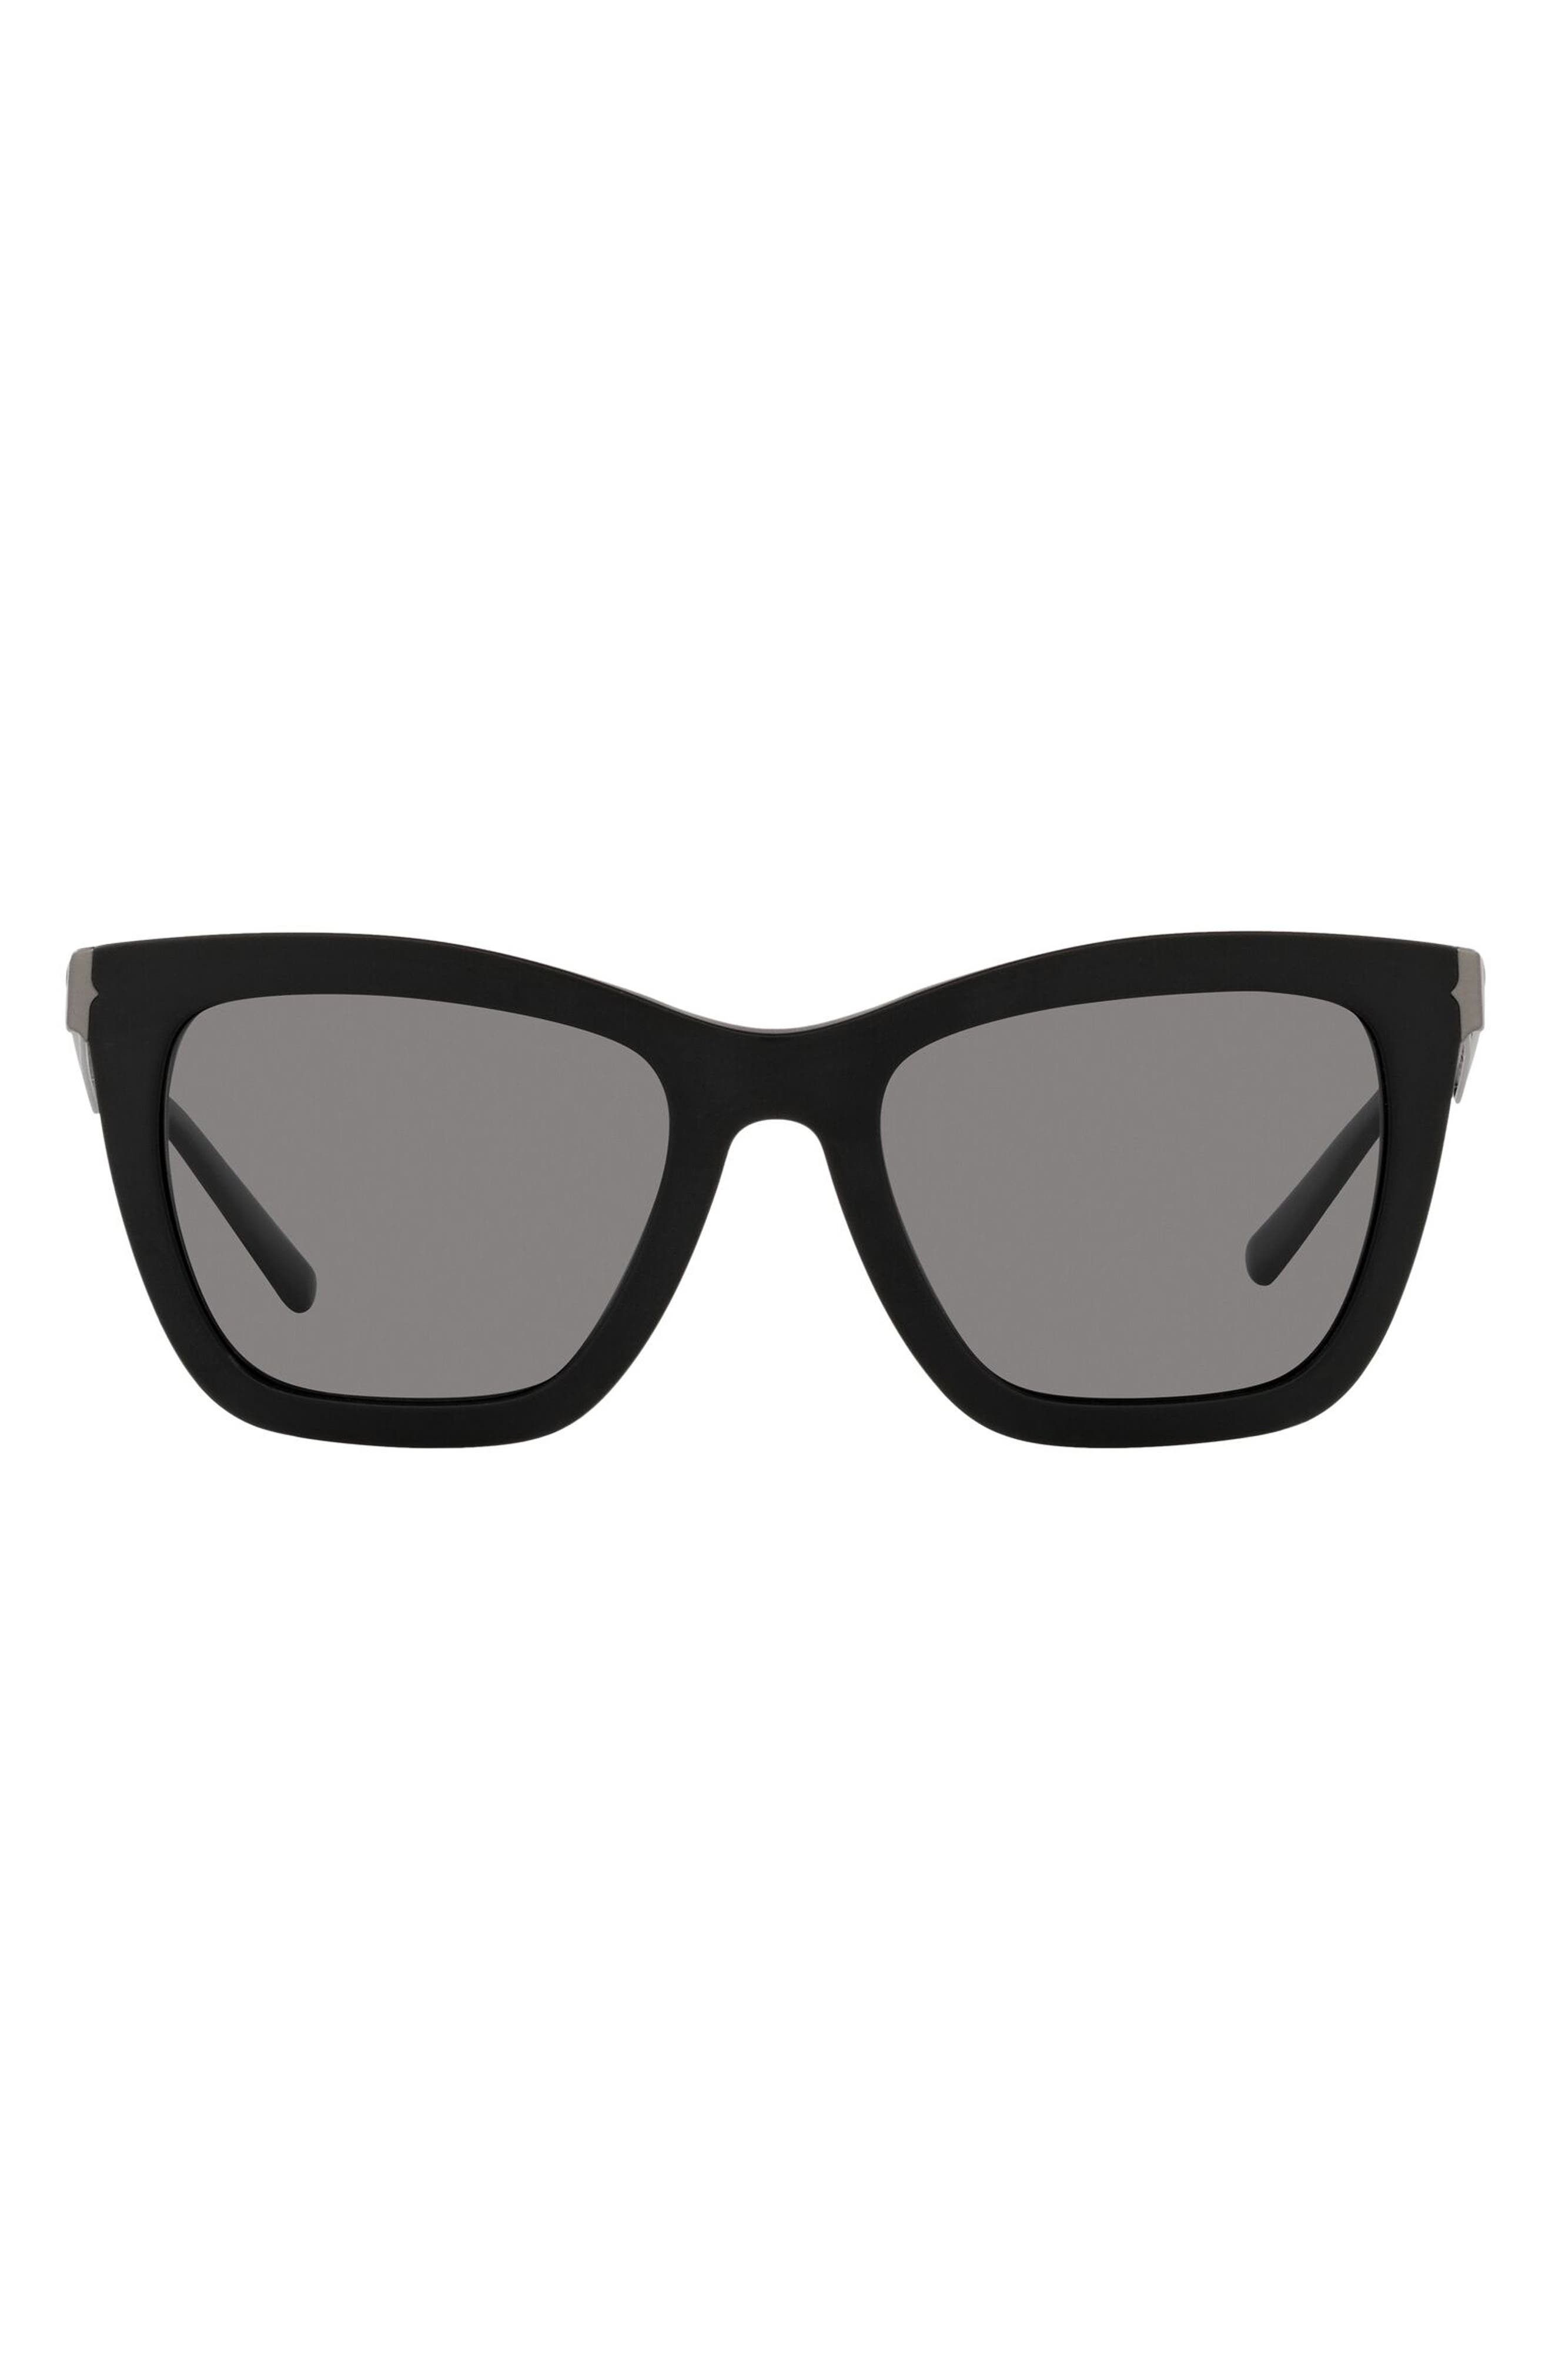 BVLGARI 54mm Square Sunglasses in Matte Black at Nordstrom